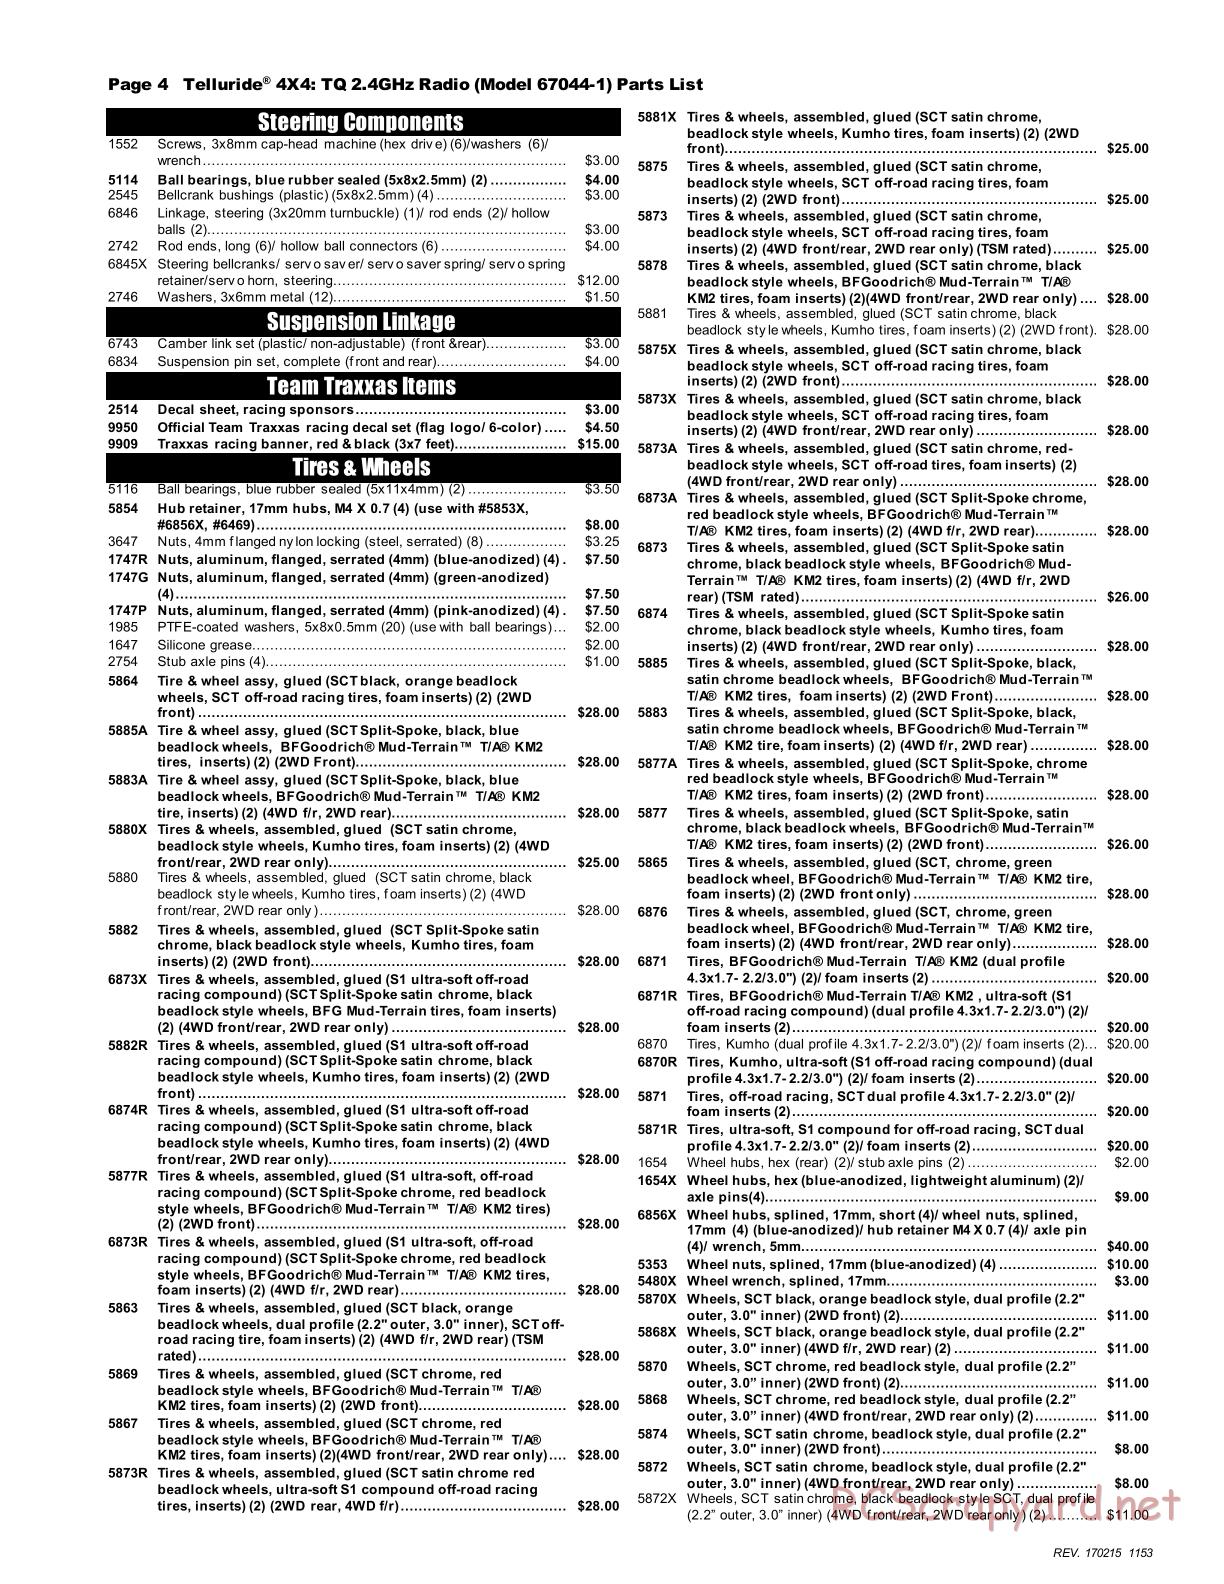 Traxxas - Telluride 4x4 (2015) - Parts List - Page 4